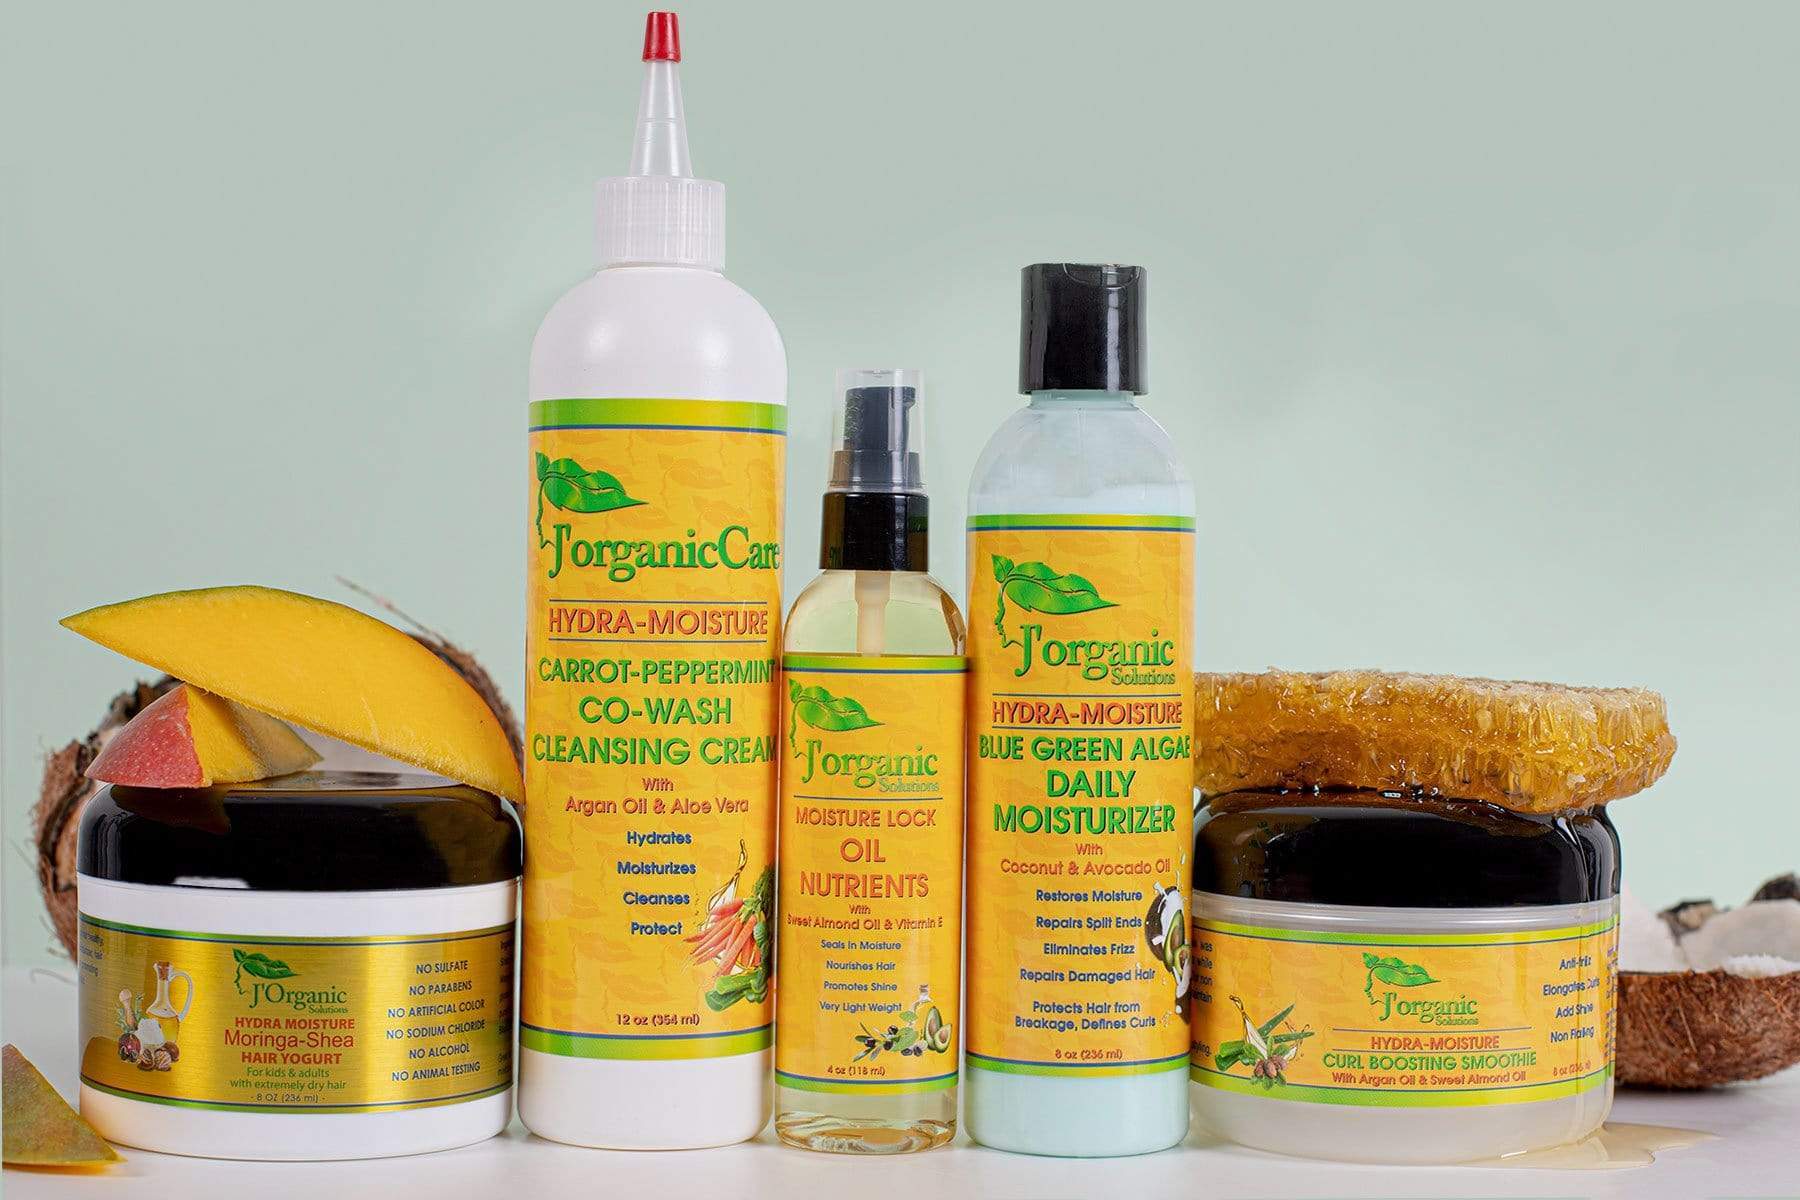 Hydra-Moisture Curls Popping Kit - J’Organic solutions